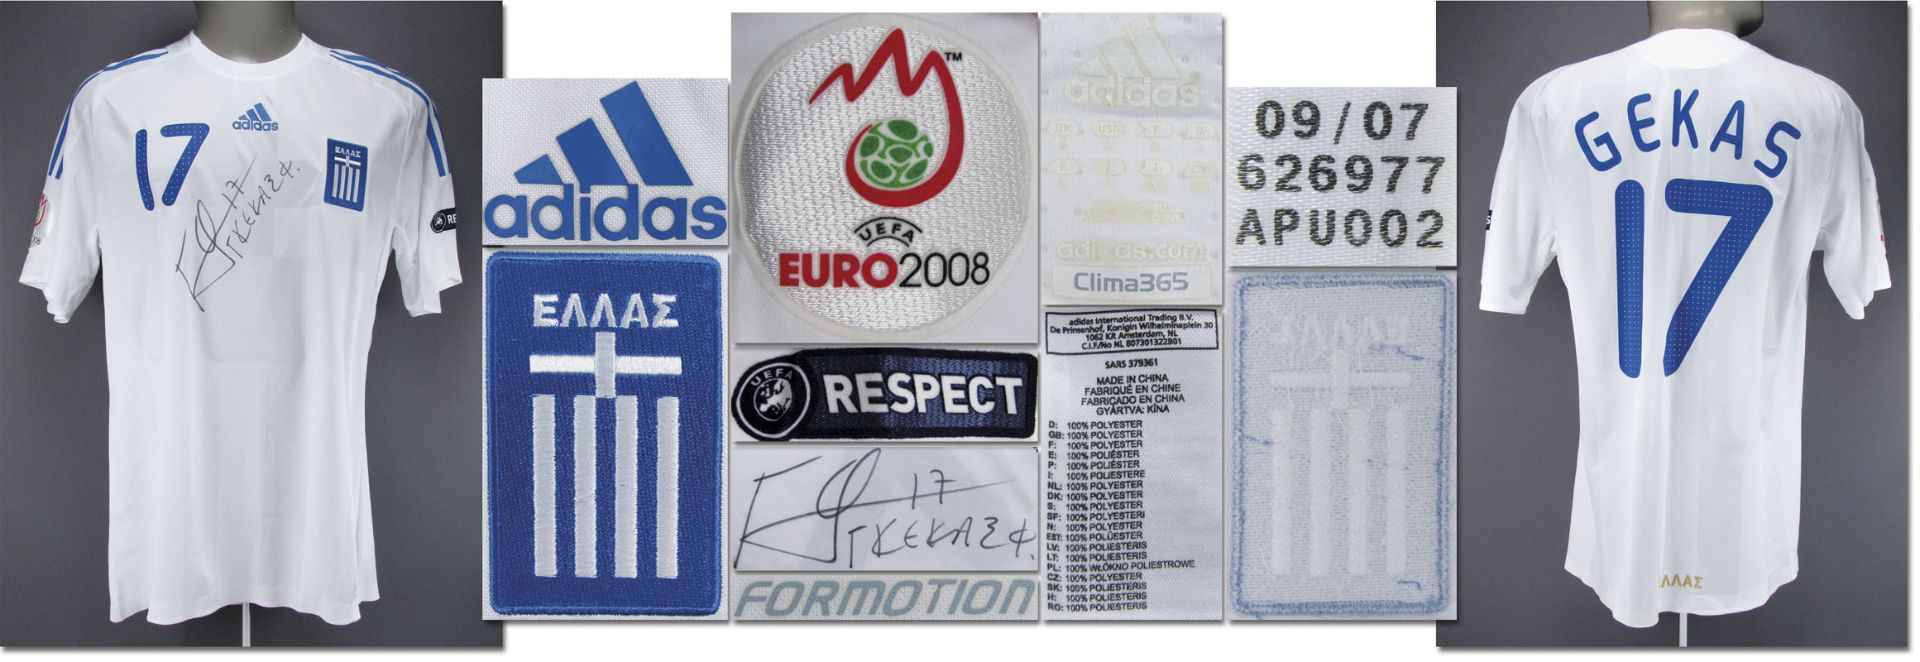 UEFA EURO 2008 match worn football shirt Greece - Original match worn shirt Greece with number 17. W